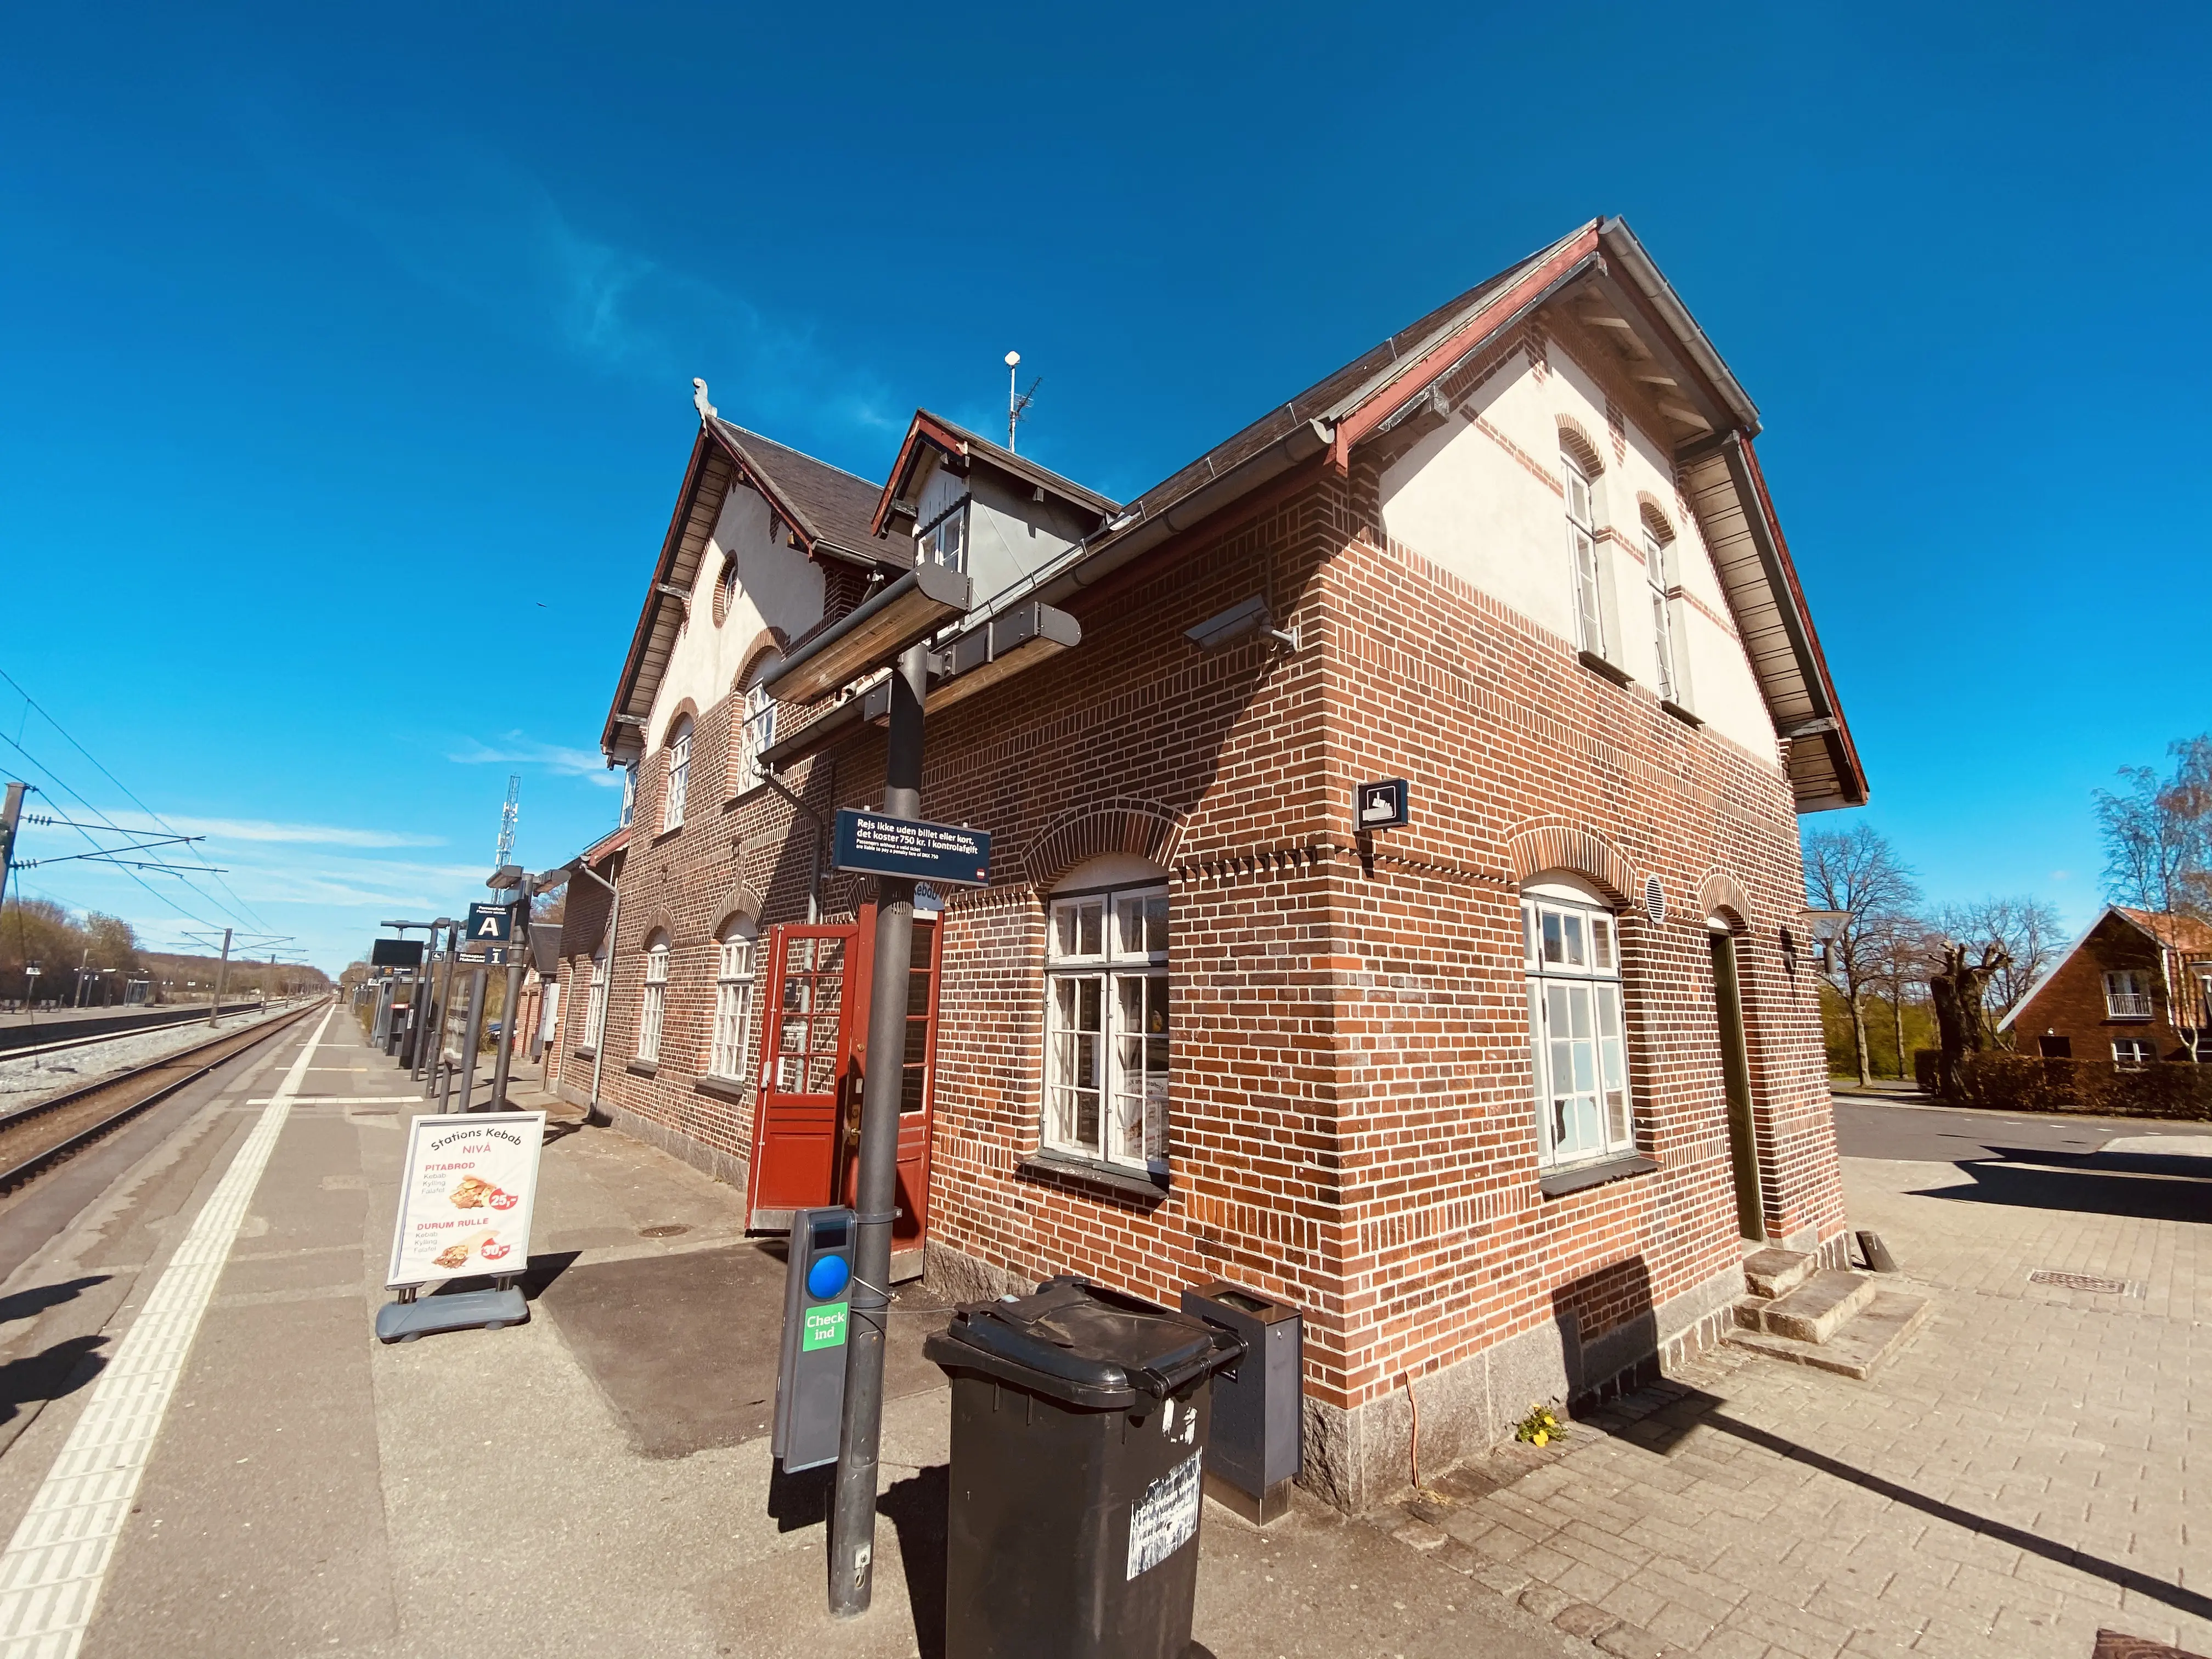 Nivå Station.